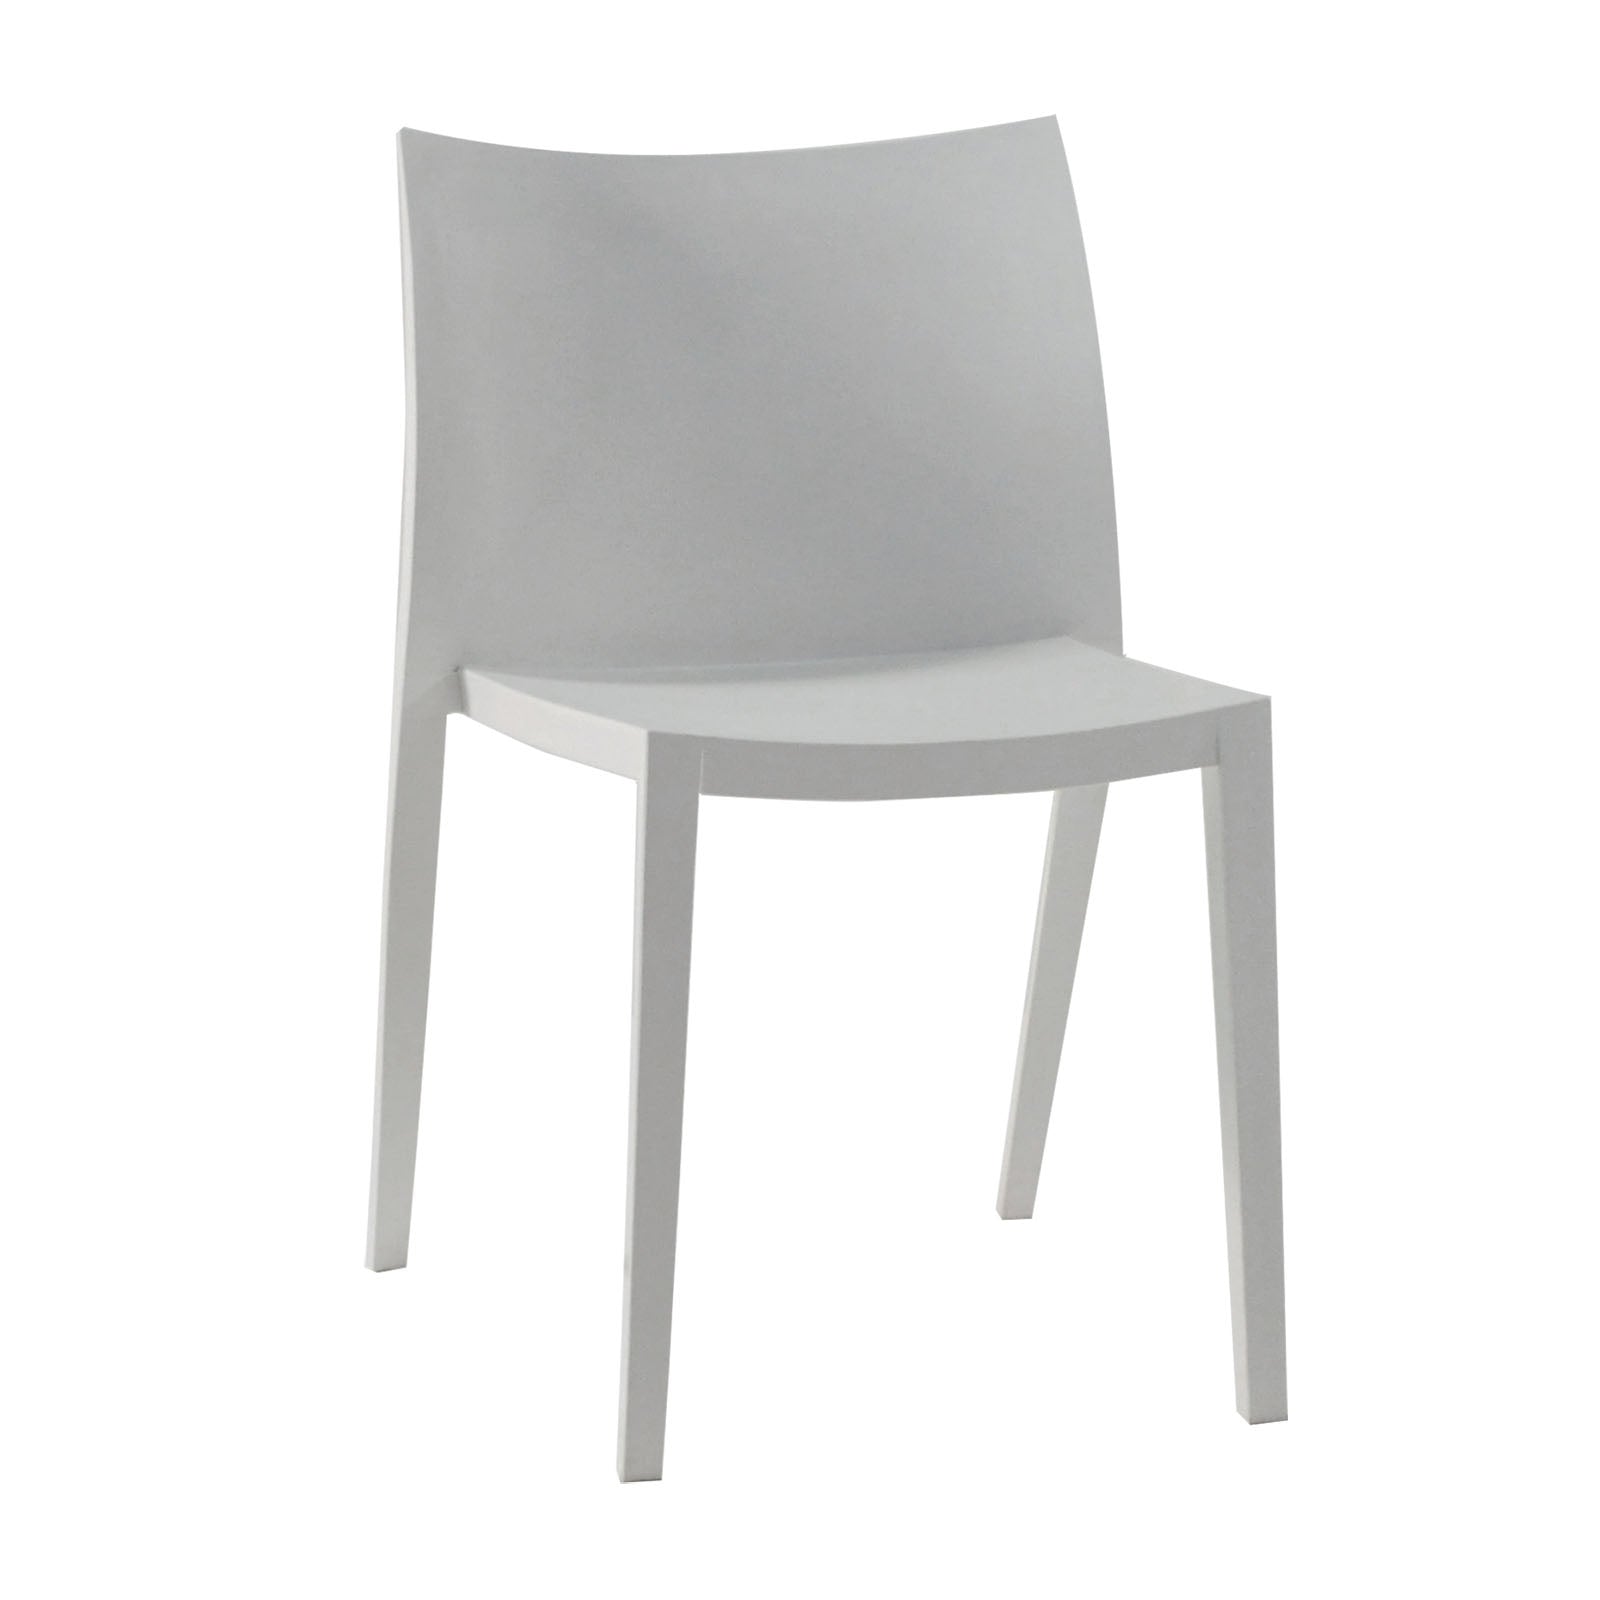 Design Warehouse - 124516 - Box Outdoor Dining Chair in Polypropylene  - Grey